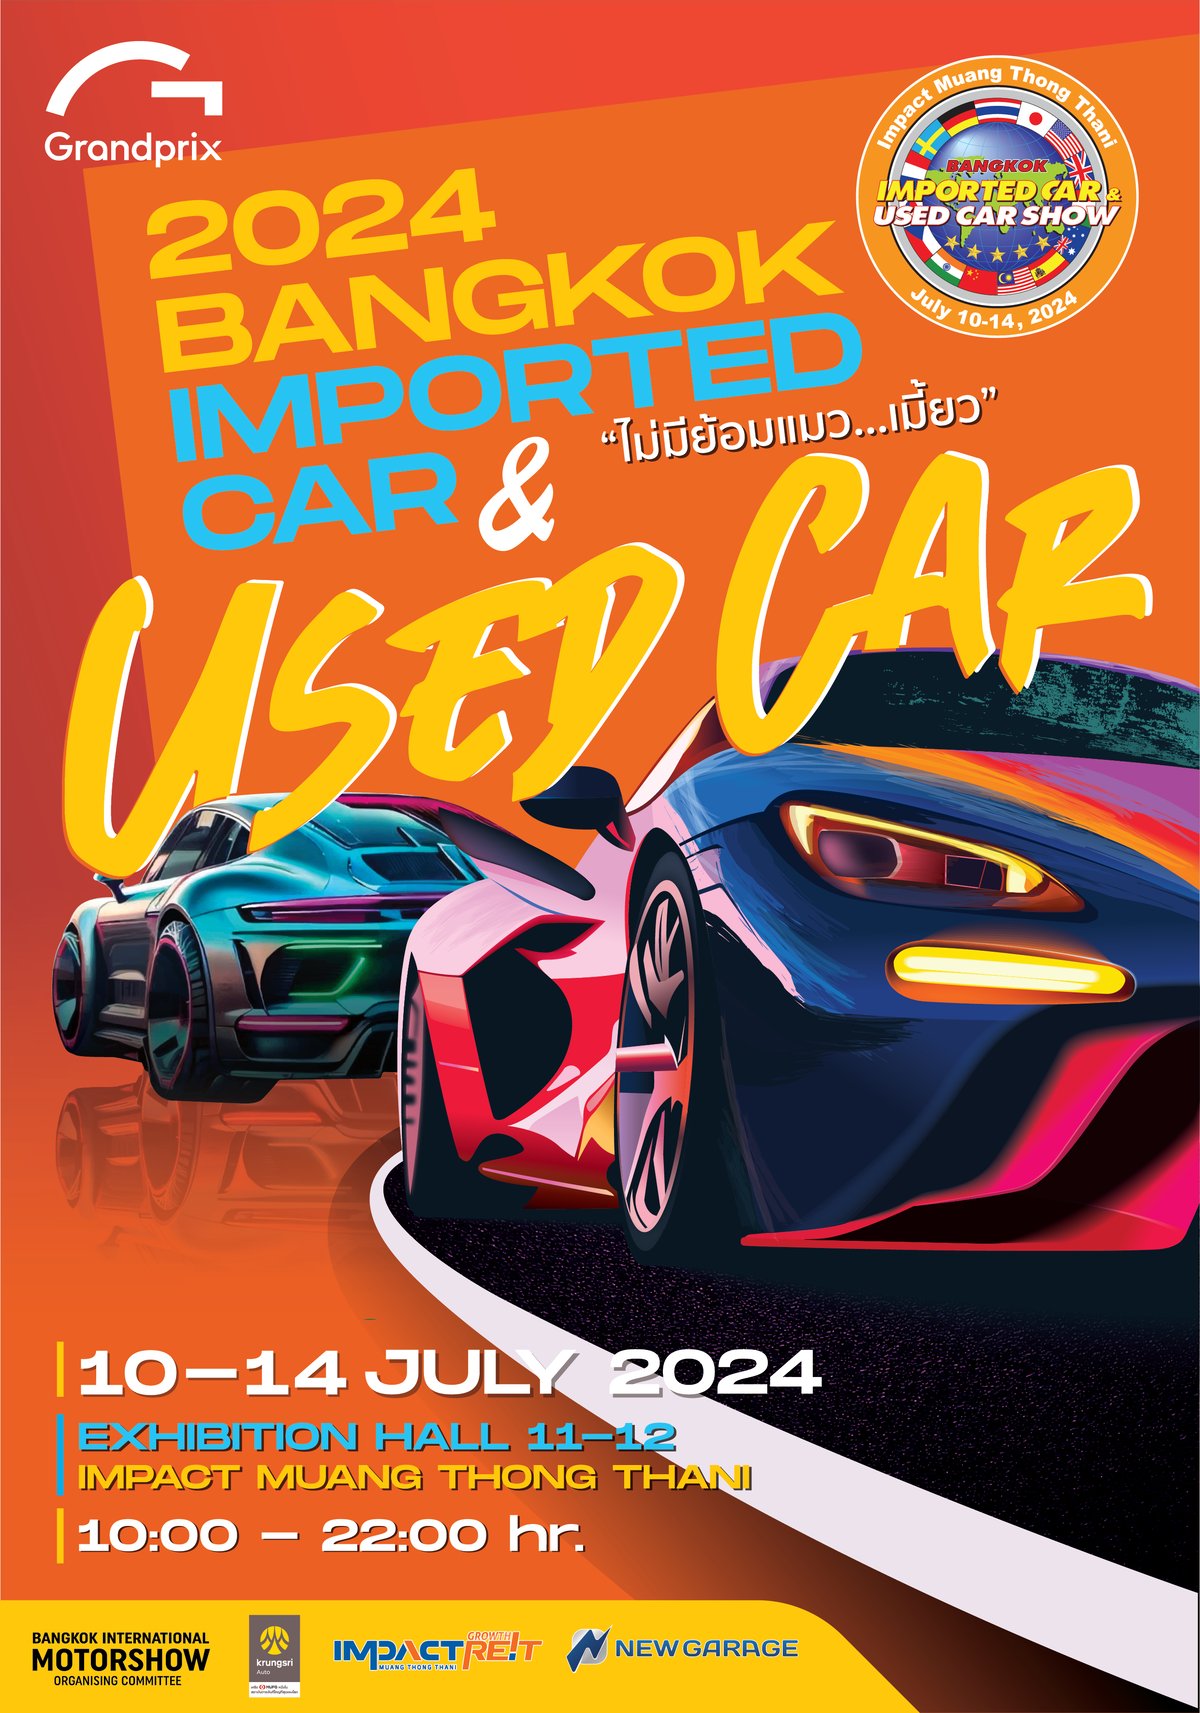 BANGKOK IMPORTED CAR & USED CAR SHOW 2024